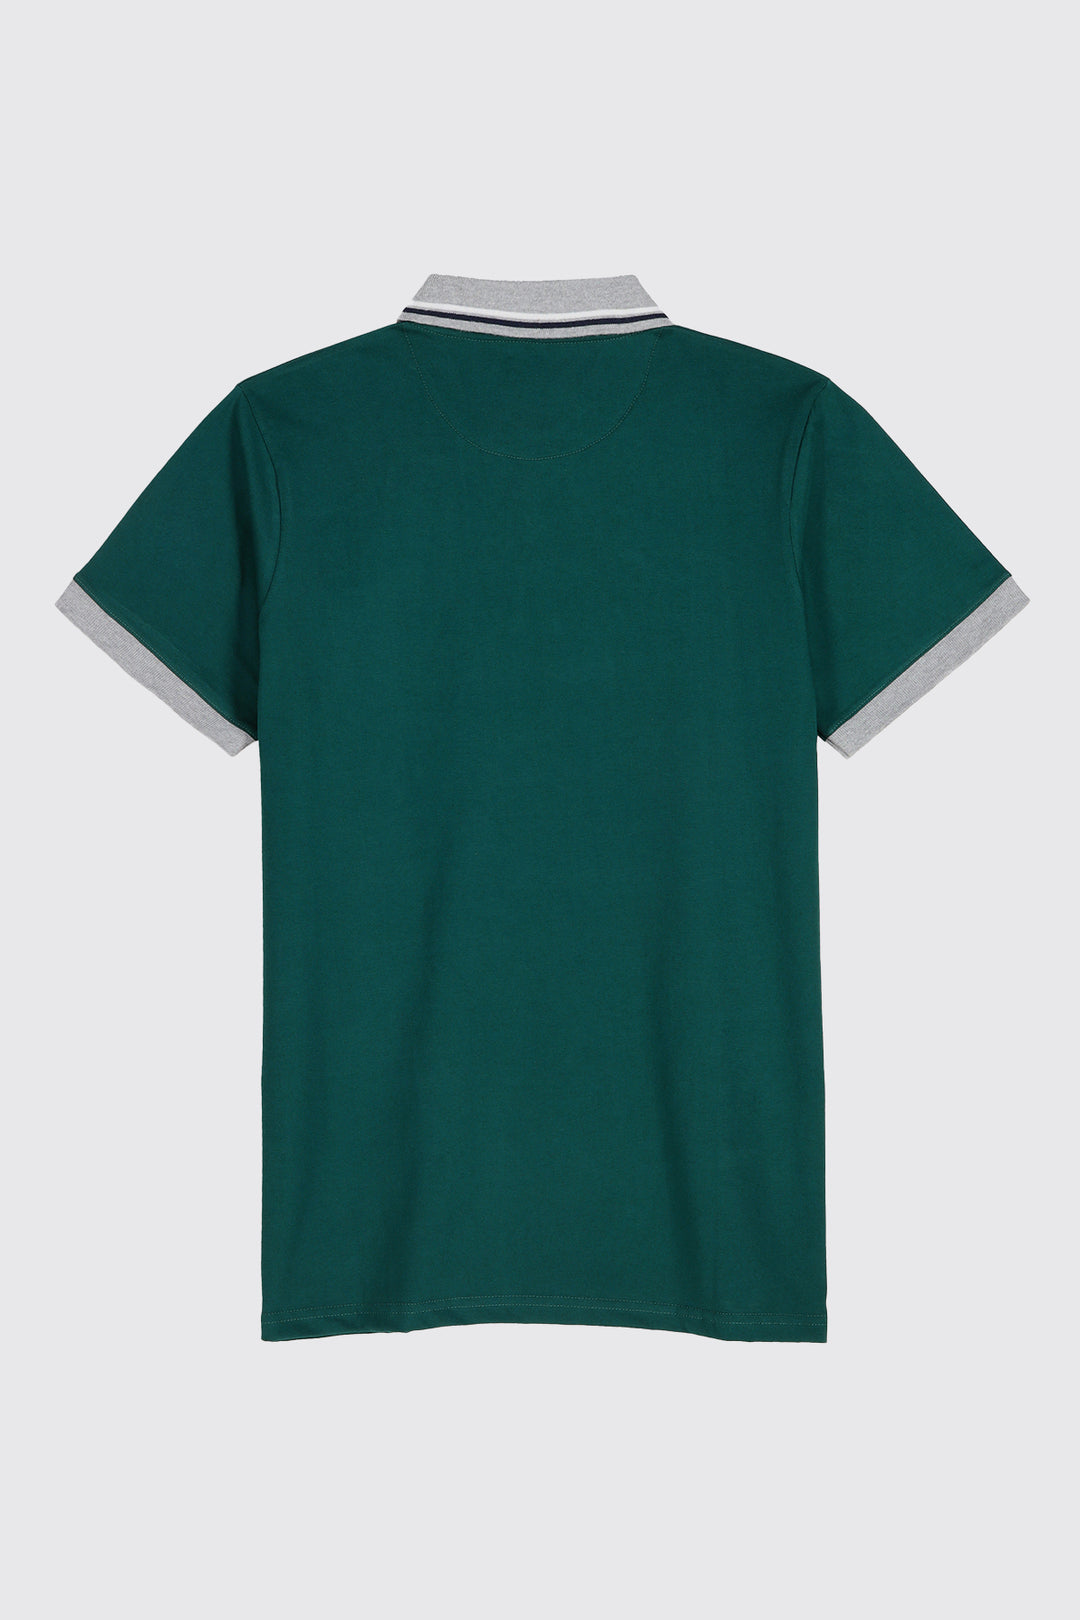 Teal & Heather Grey Tipped Collar Shirt - A23 - MP0214R